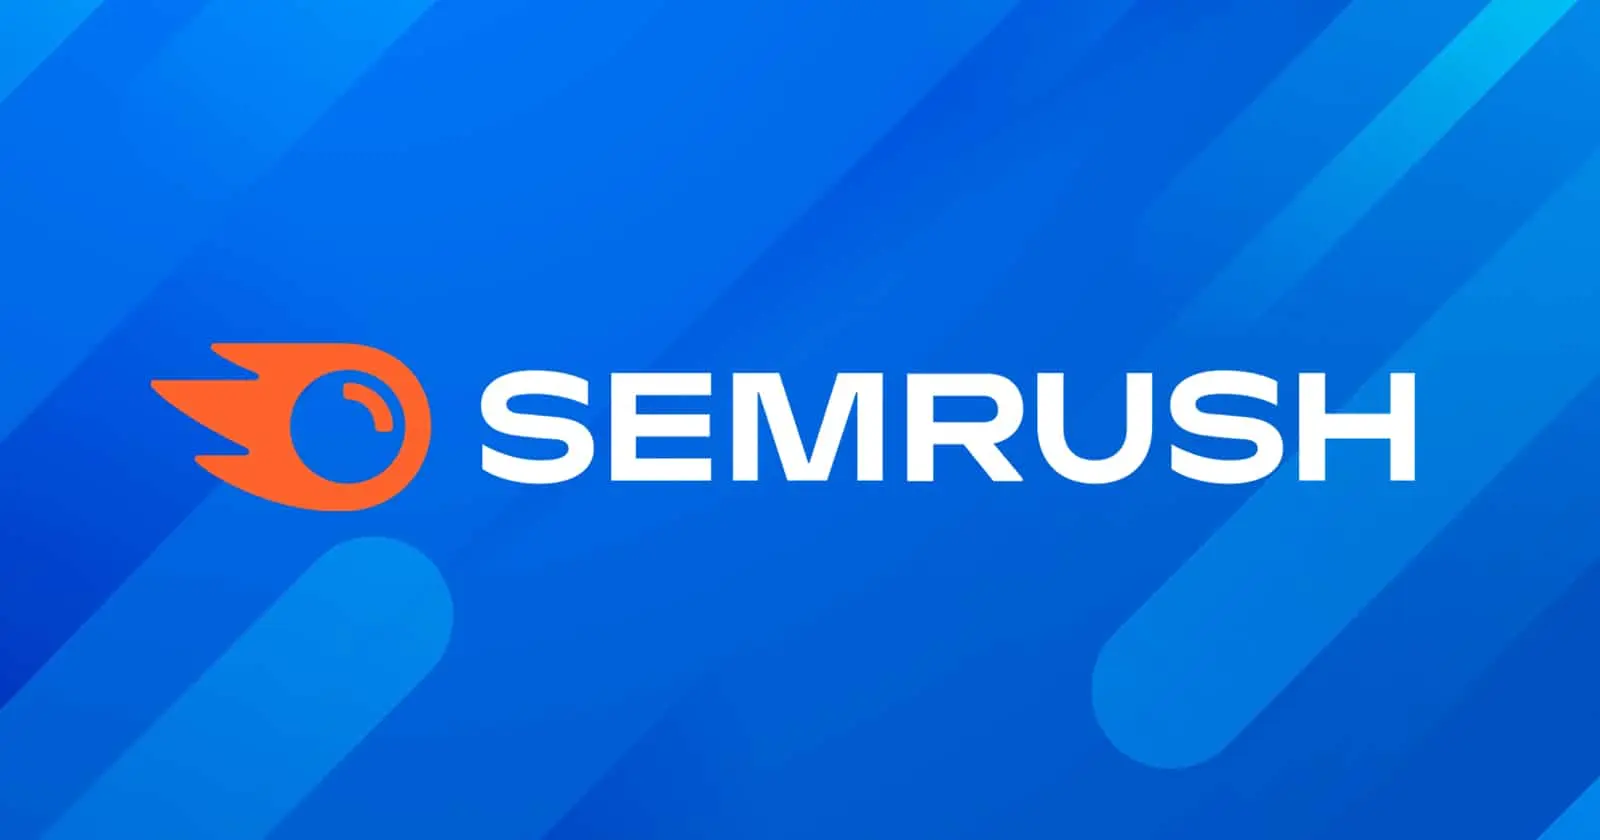 Semrush Google Ads Spy Tool Software